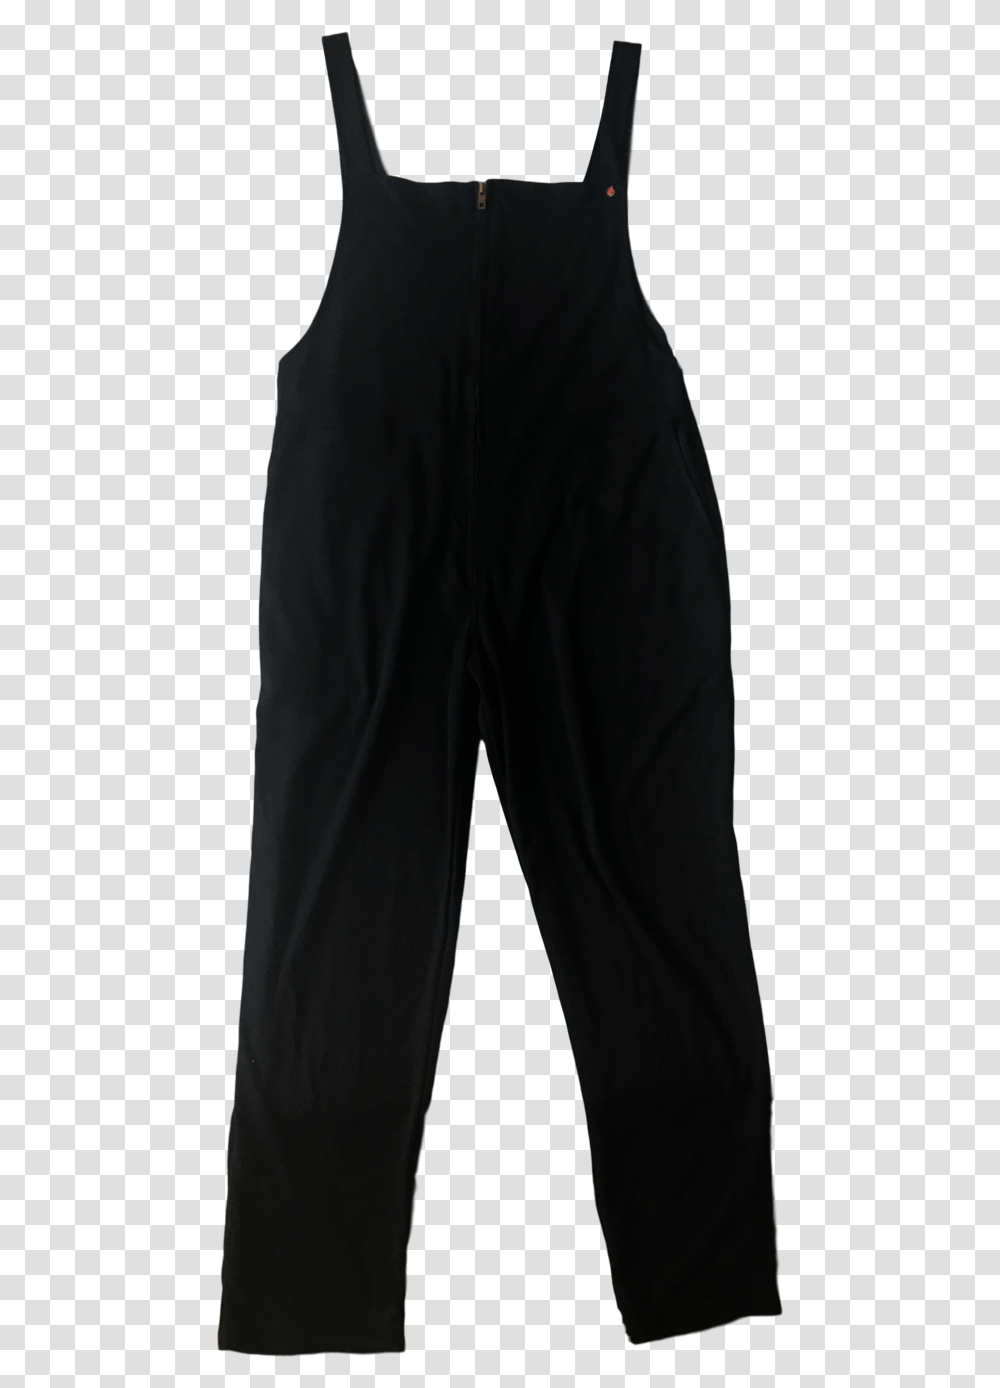 One Piece Garment, Pants, Apparel, Shorts Transparent Png